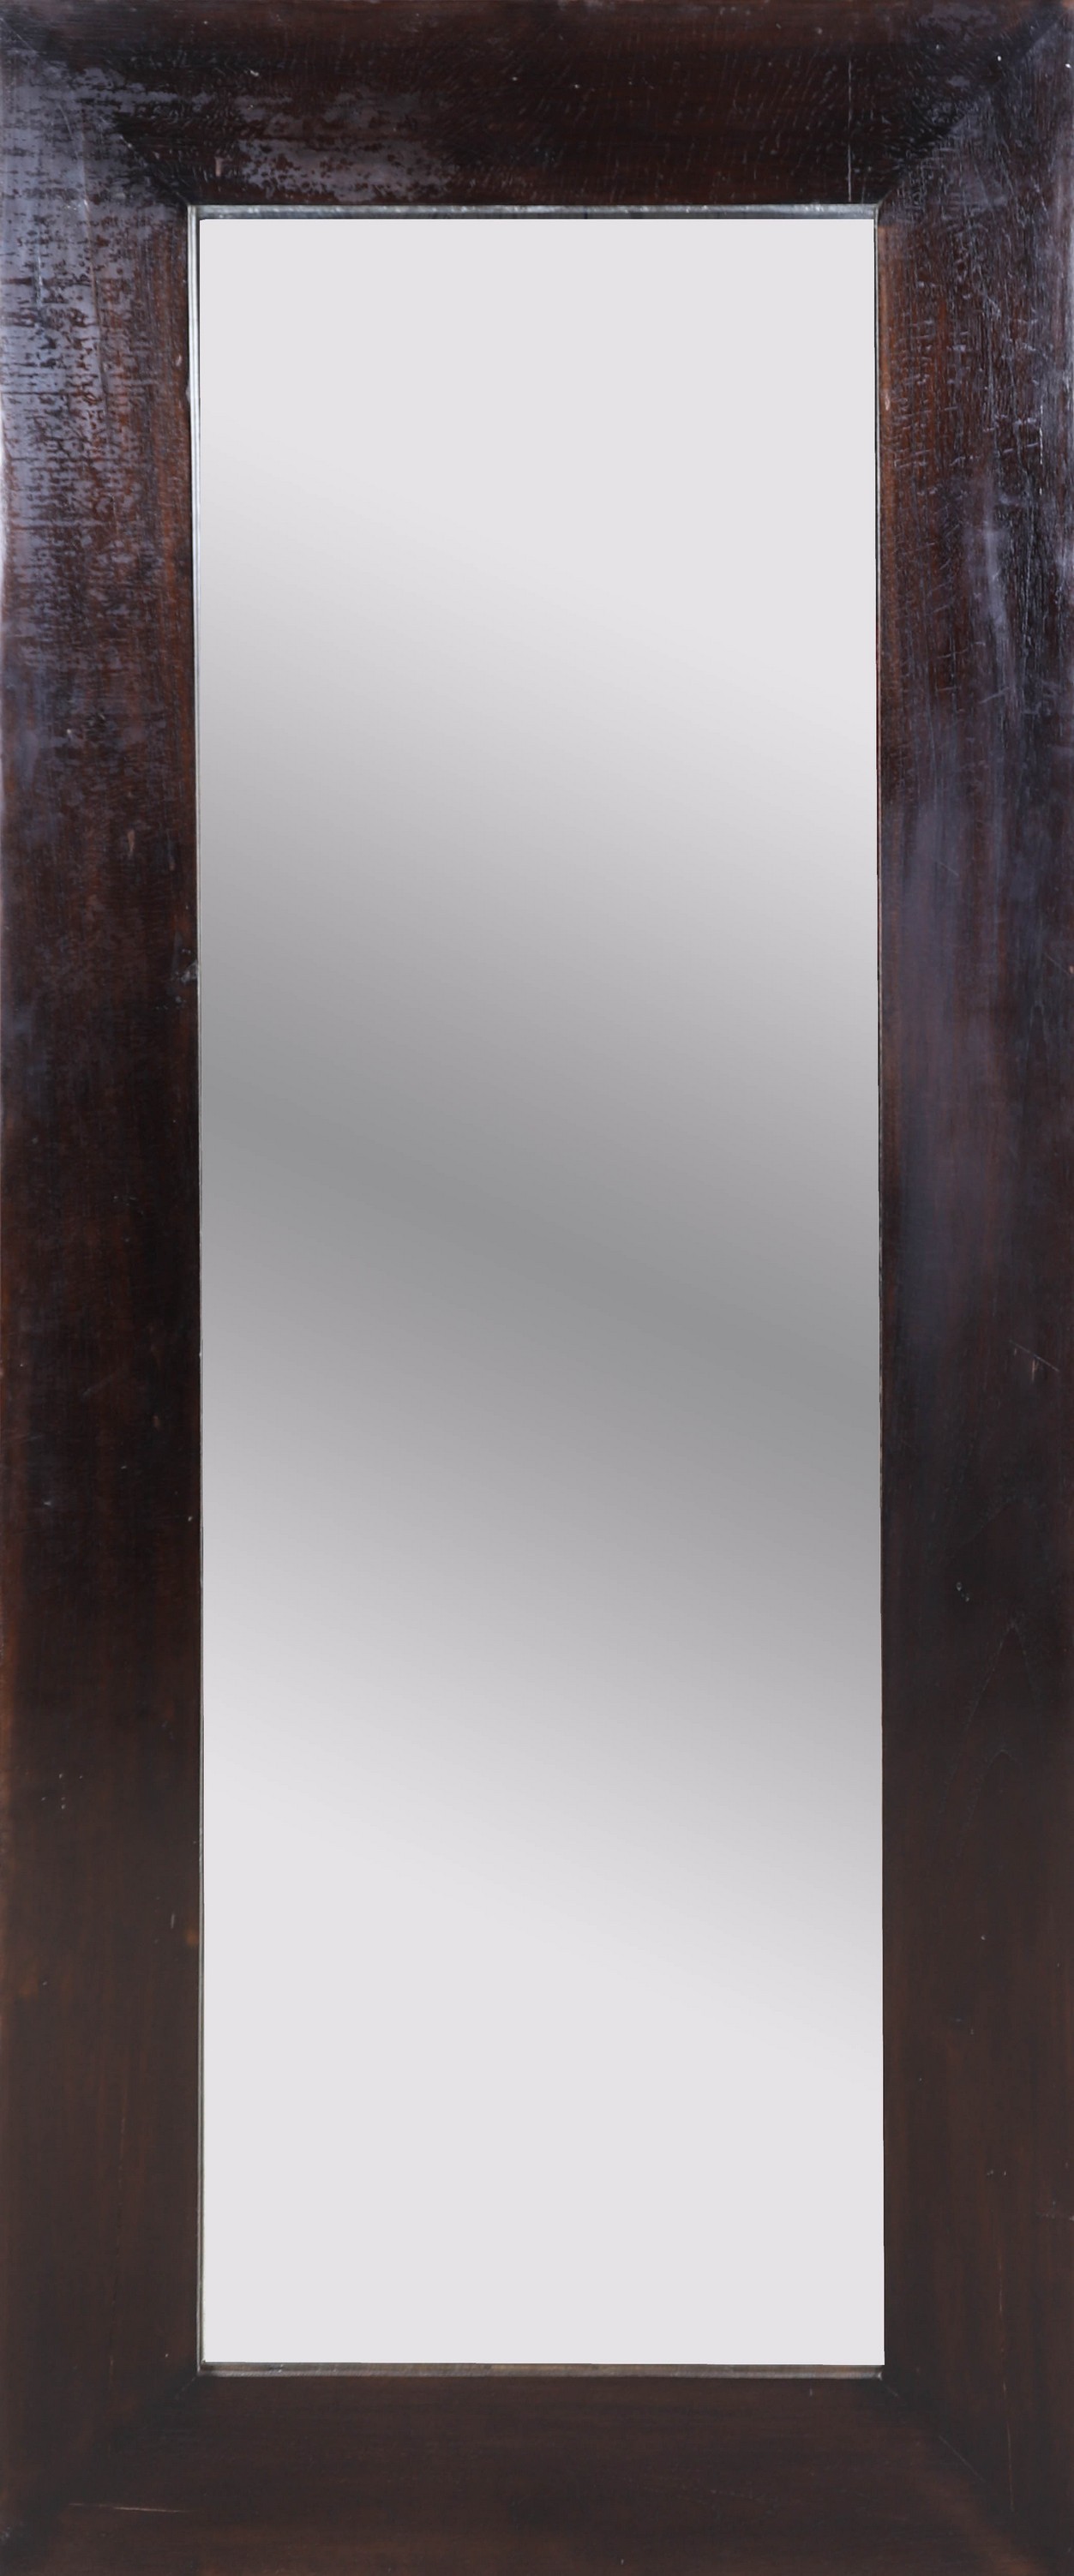 Large oak mirror, 75 x 31